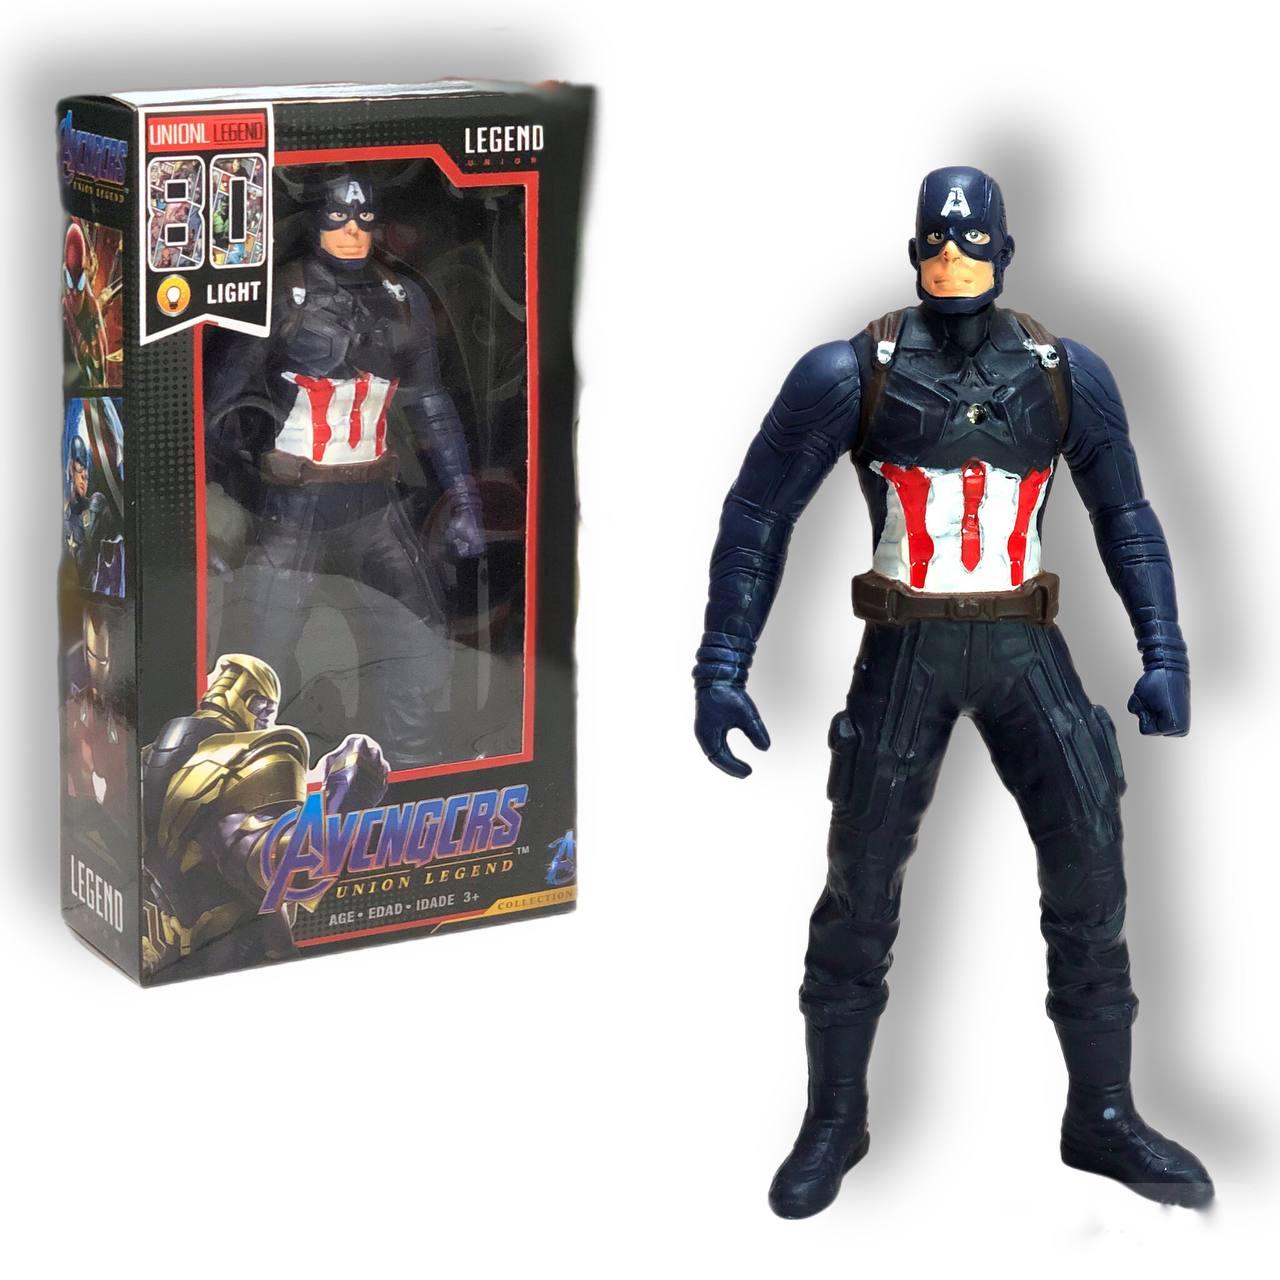 Фигурка супергероя Капитан Америка Legend union 15 см